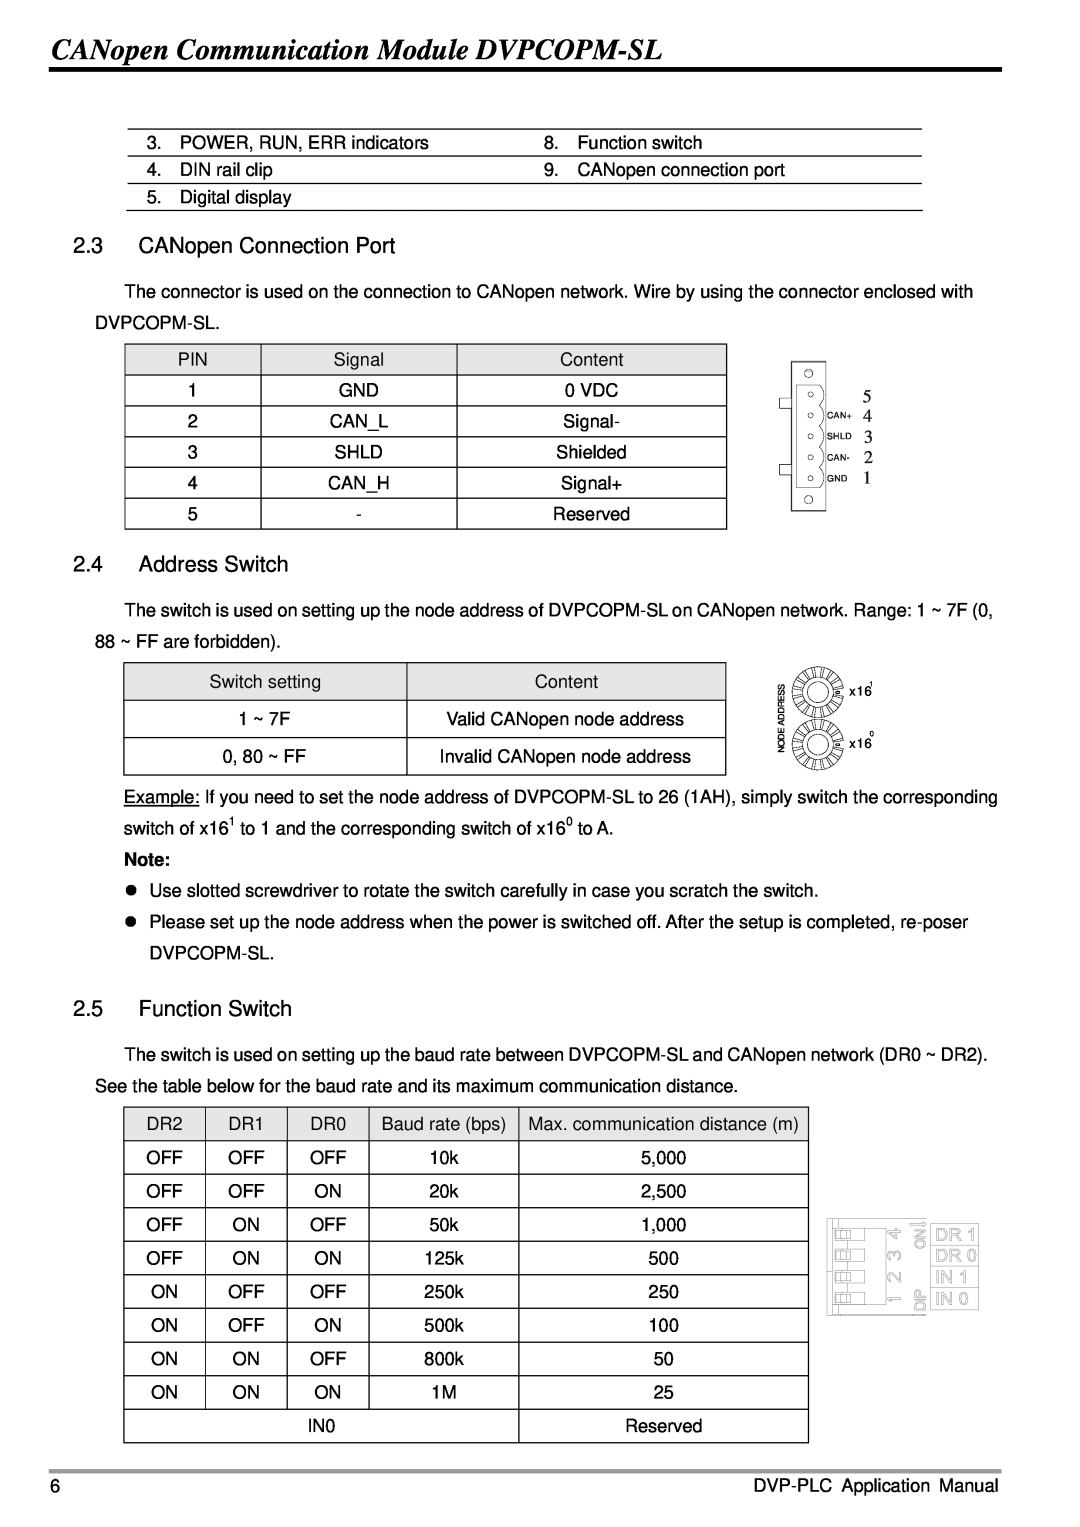 Delta Electronics DVPCOPM-SL manual CANopen Connection Port, Address Switch, Function Switch, Node Address 